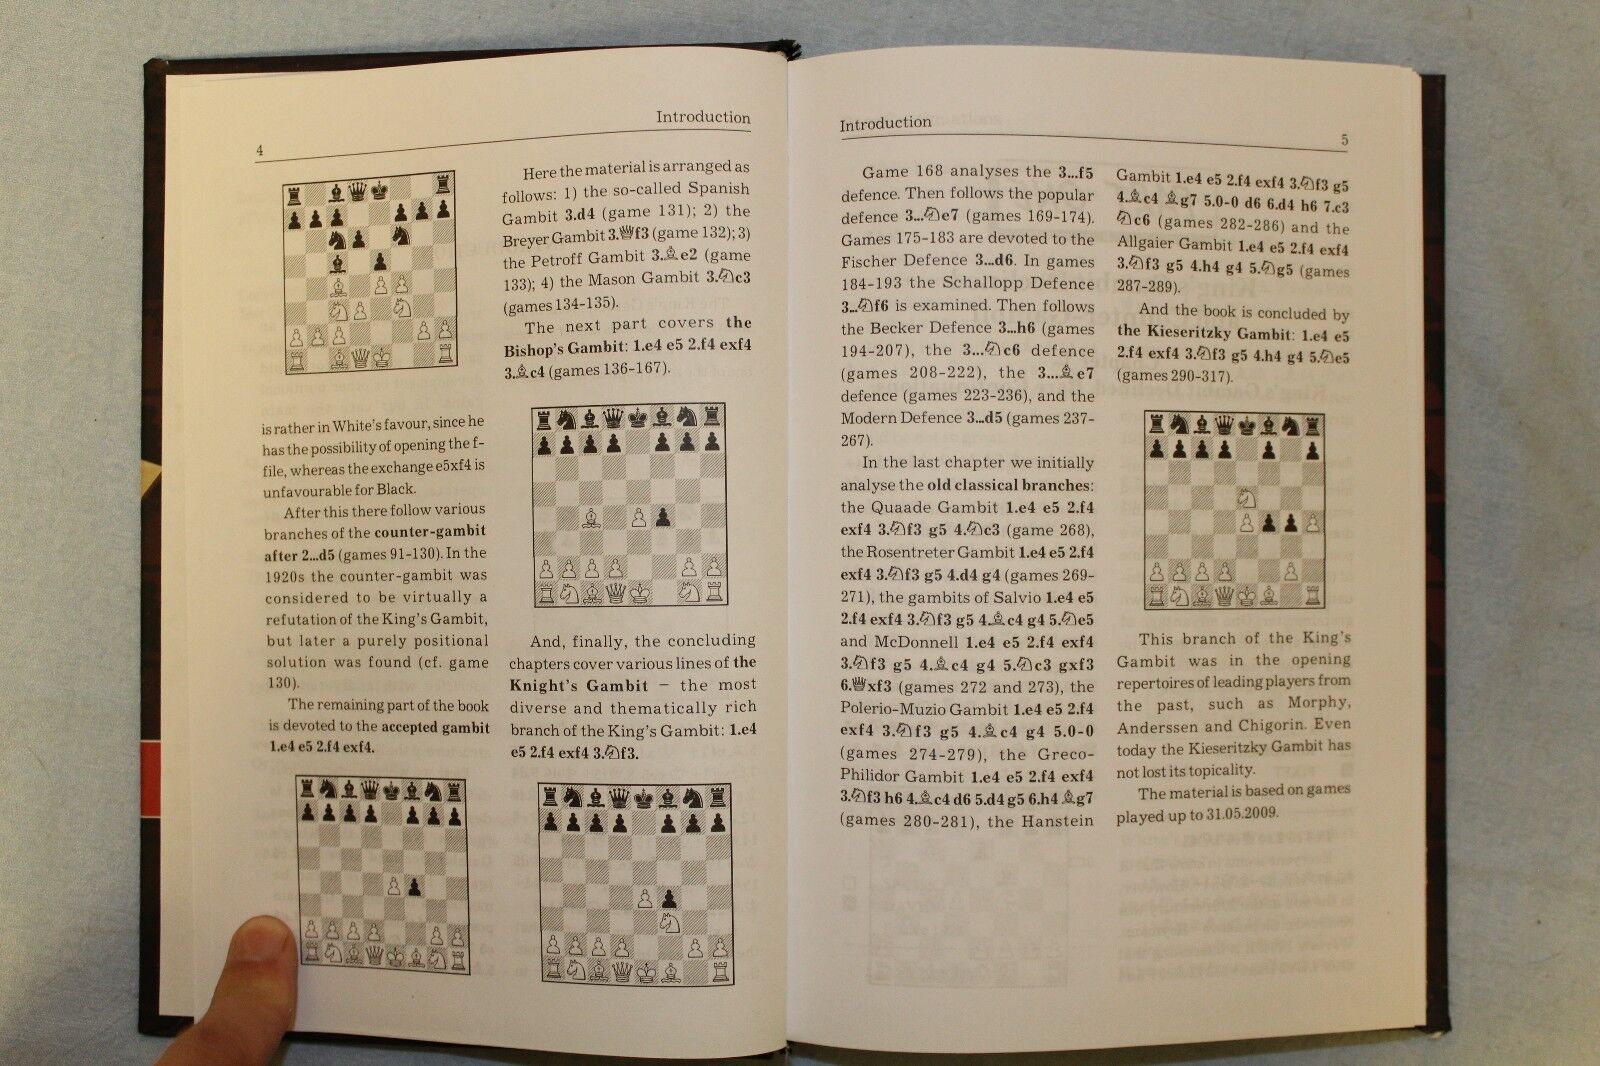 11098.Chess Book: Nikolai Kalinichenko. Kings gambit. 2009